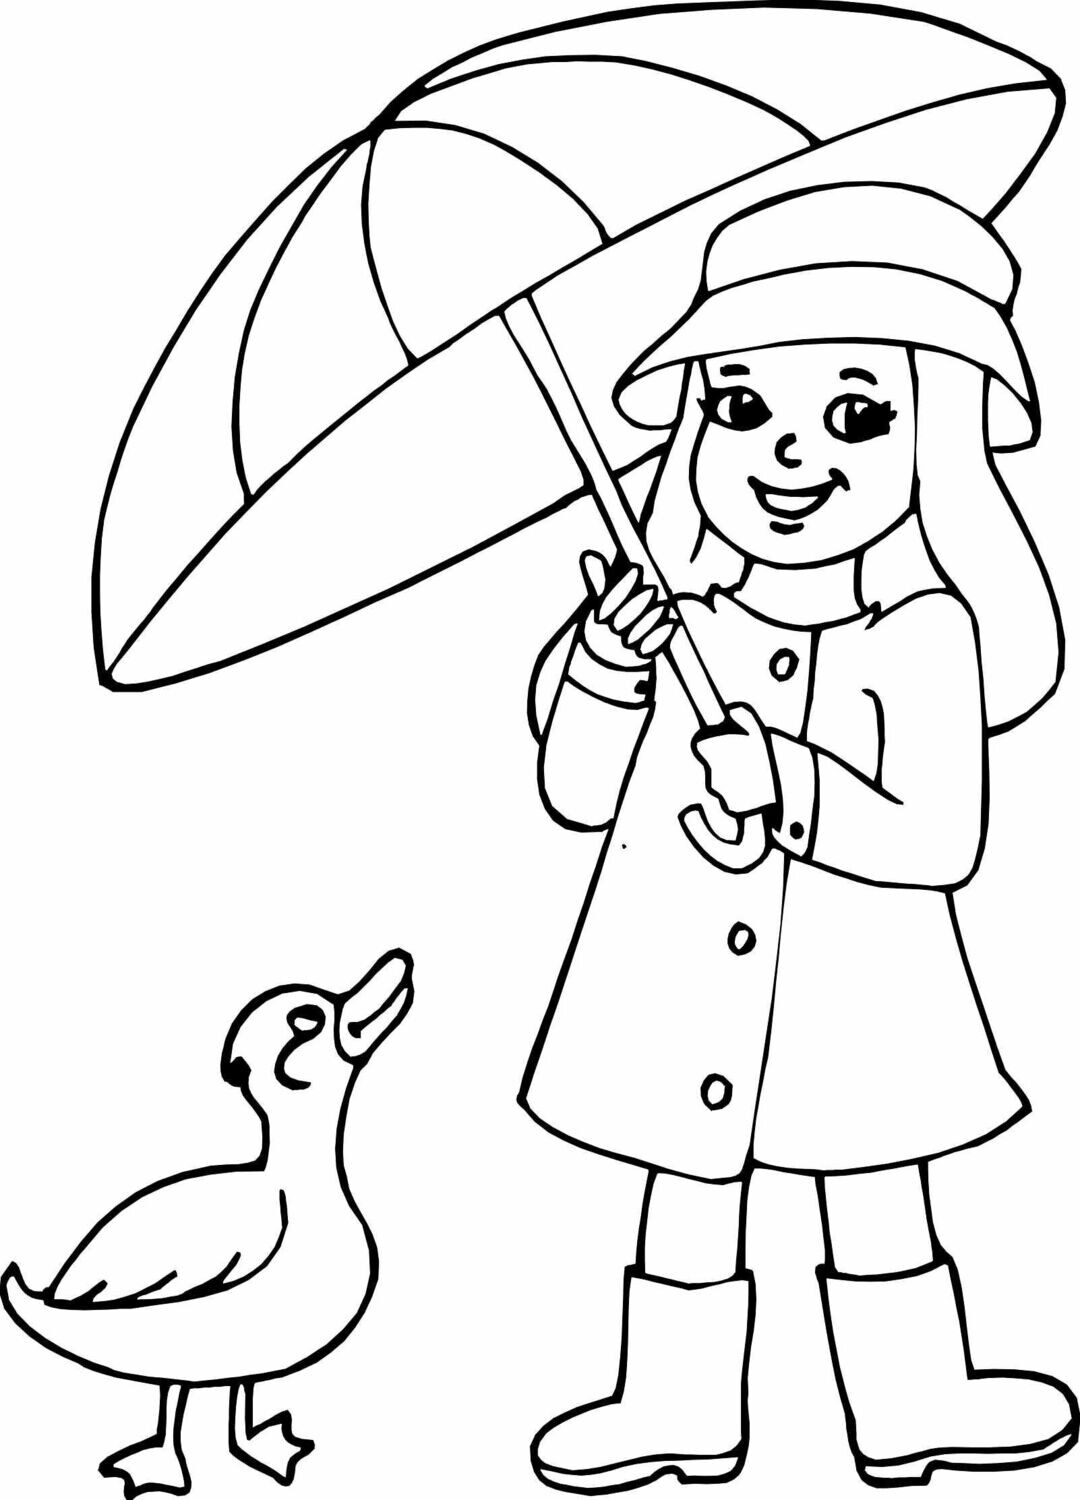 Girl with duck umbrella